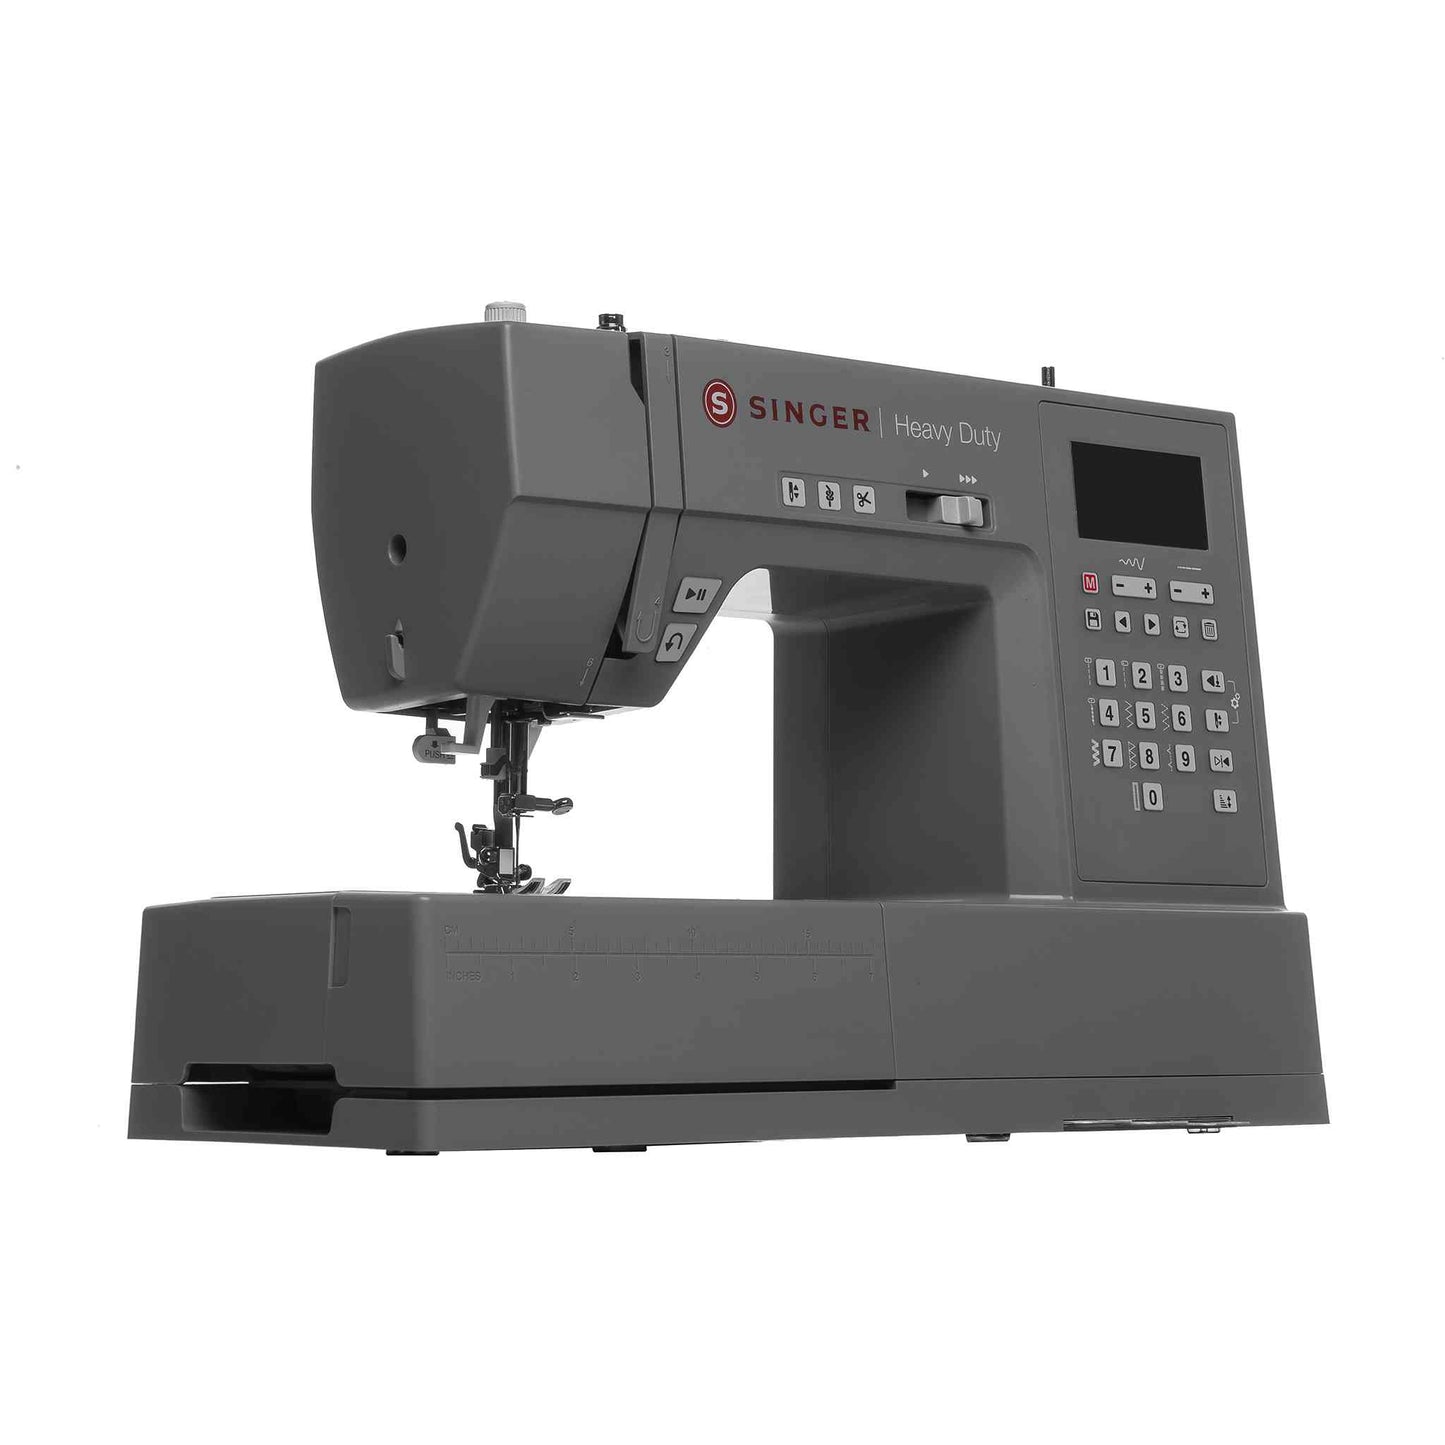 HD 6805 Sewing Machine Hardware/Electronic